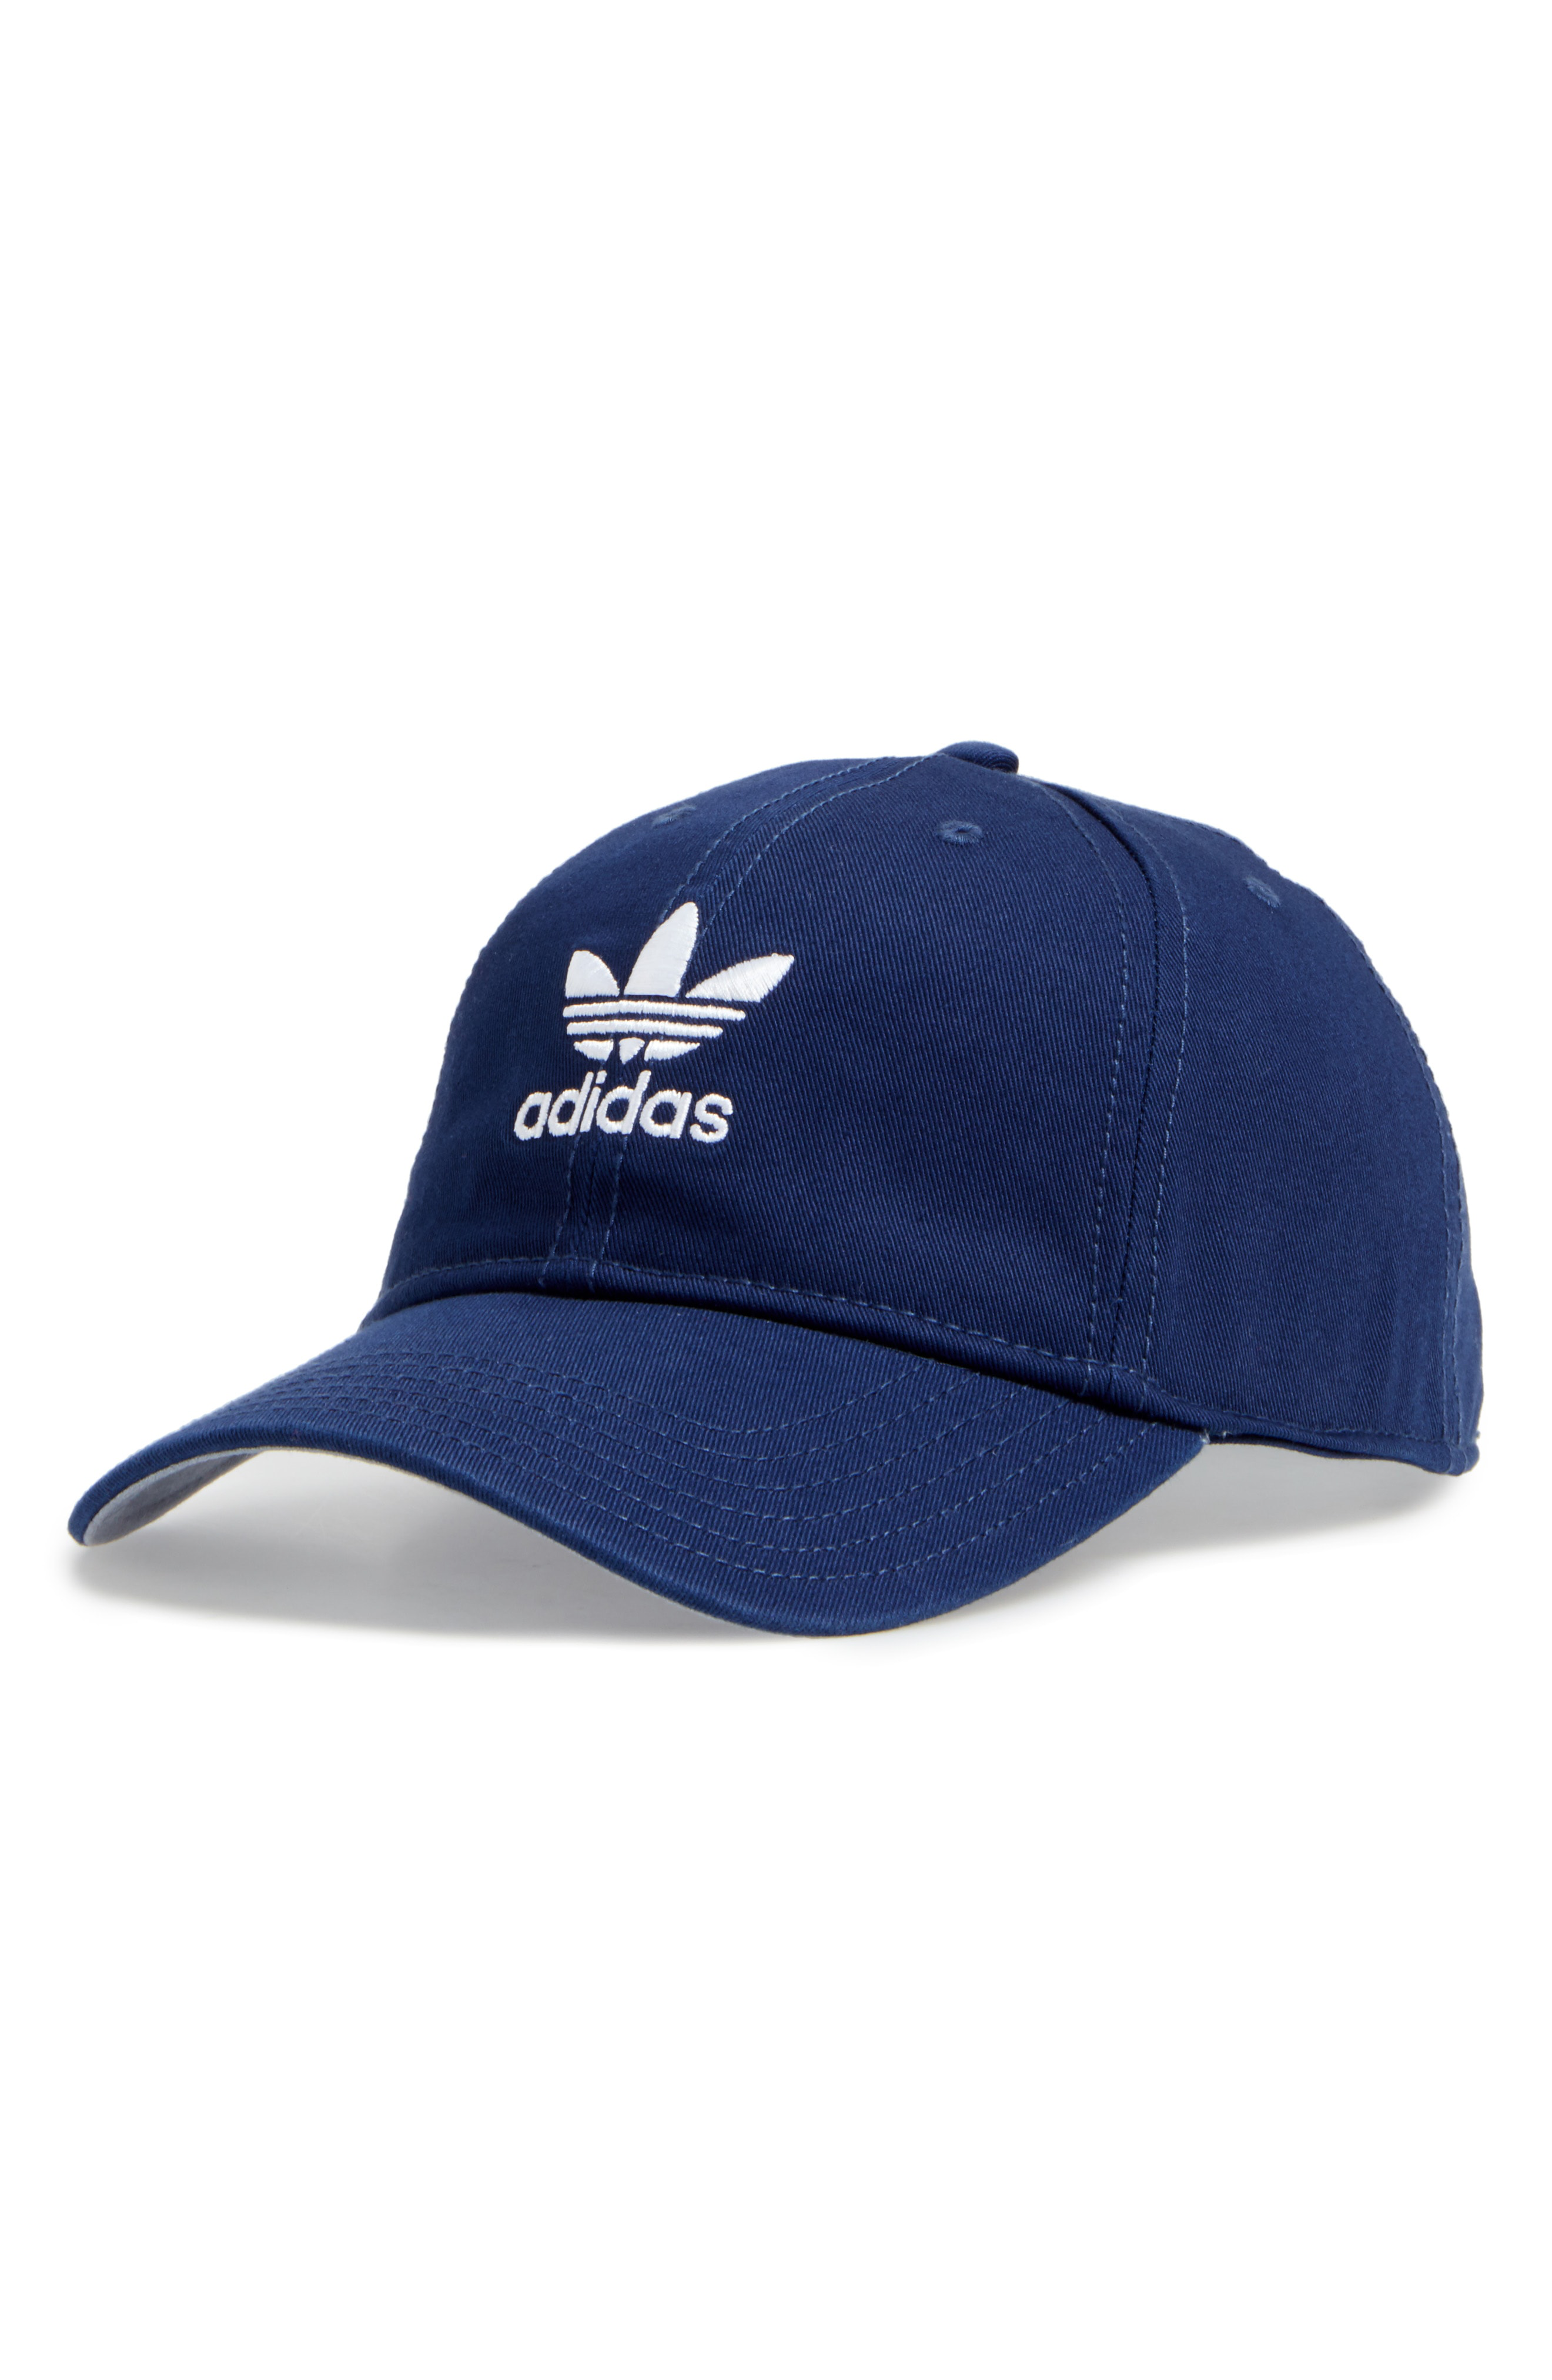 navy blue adidas baseball cap